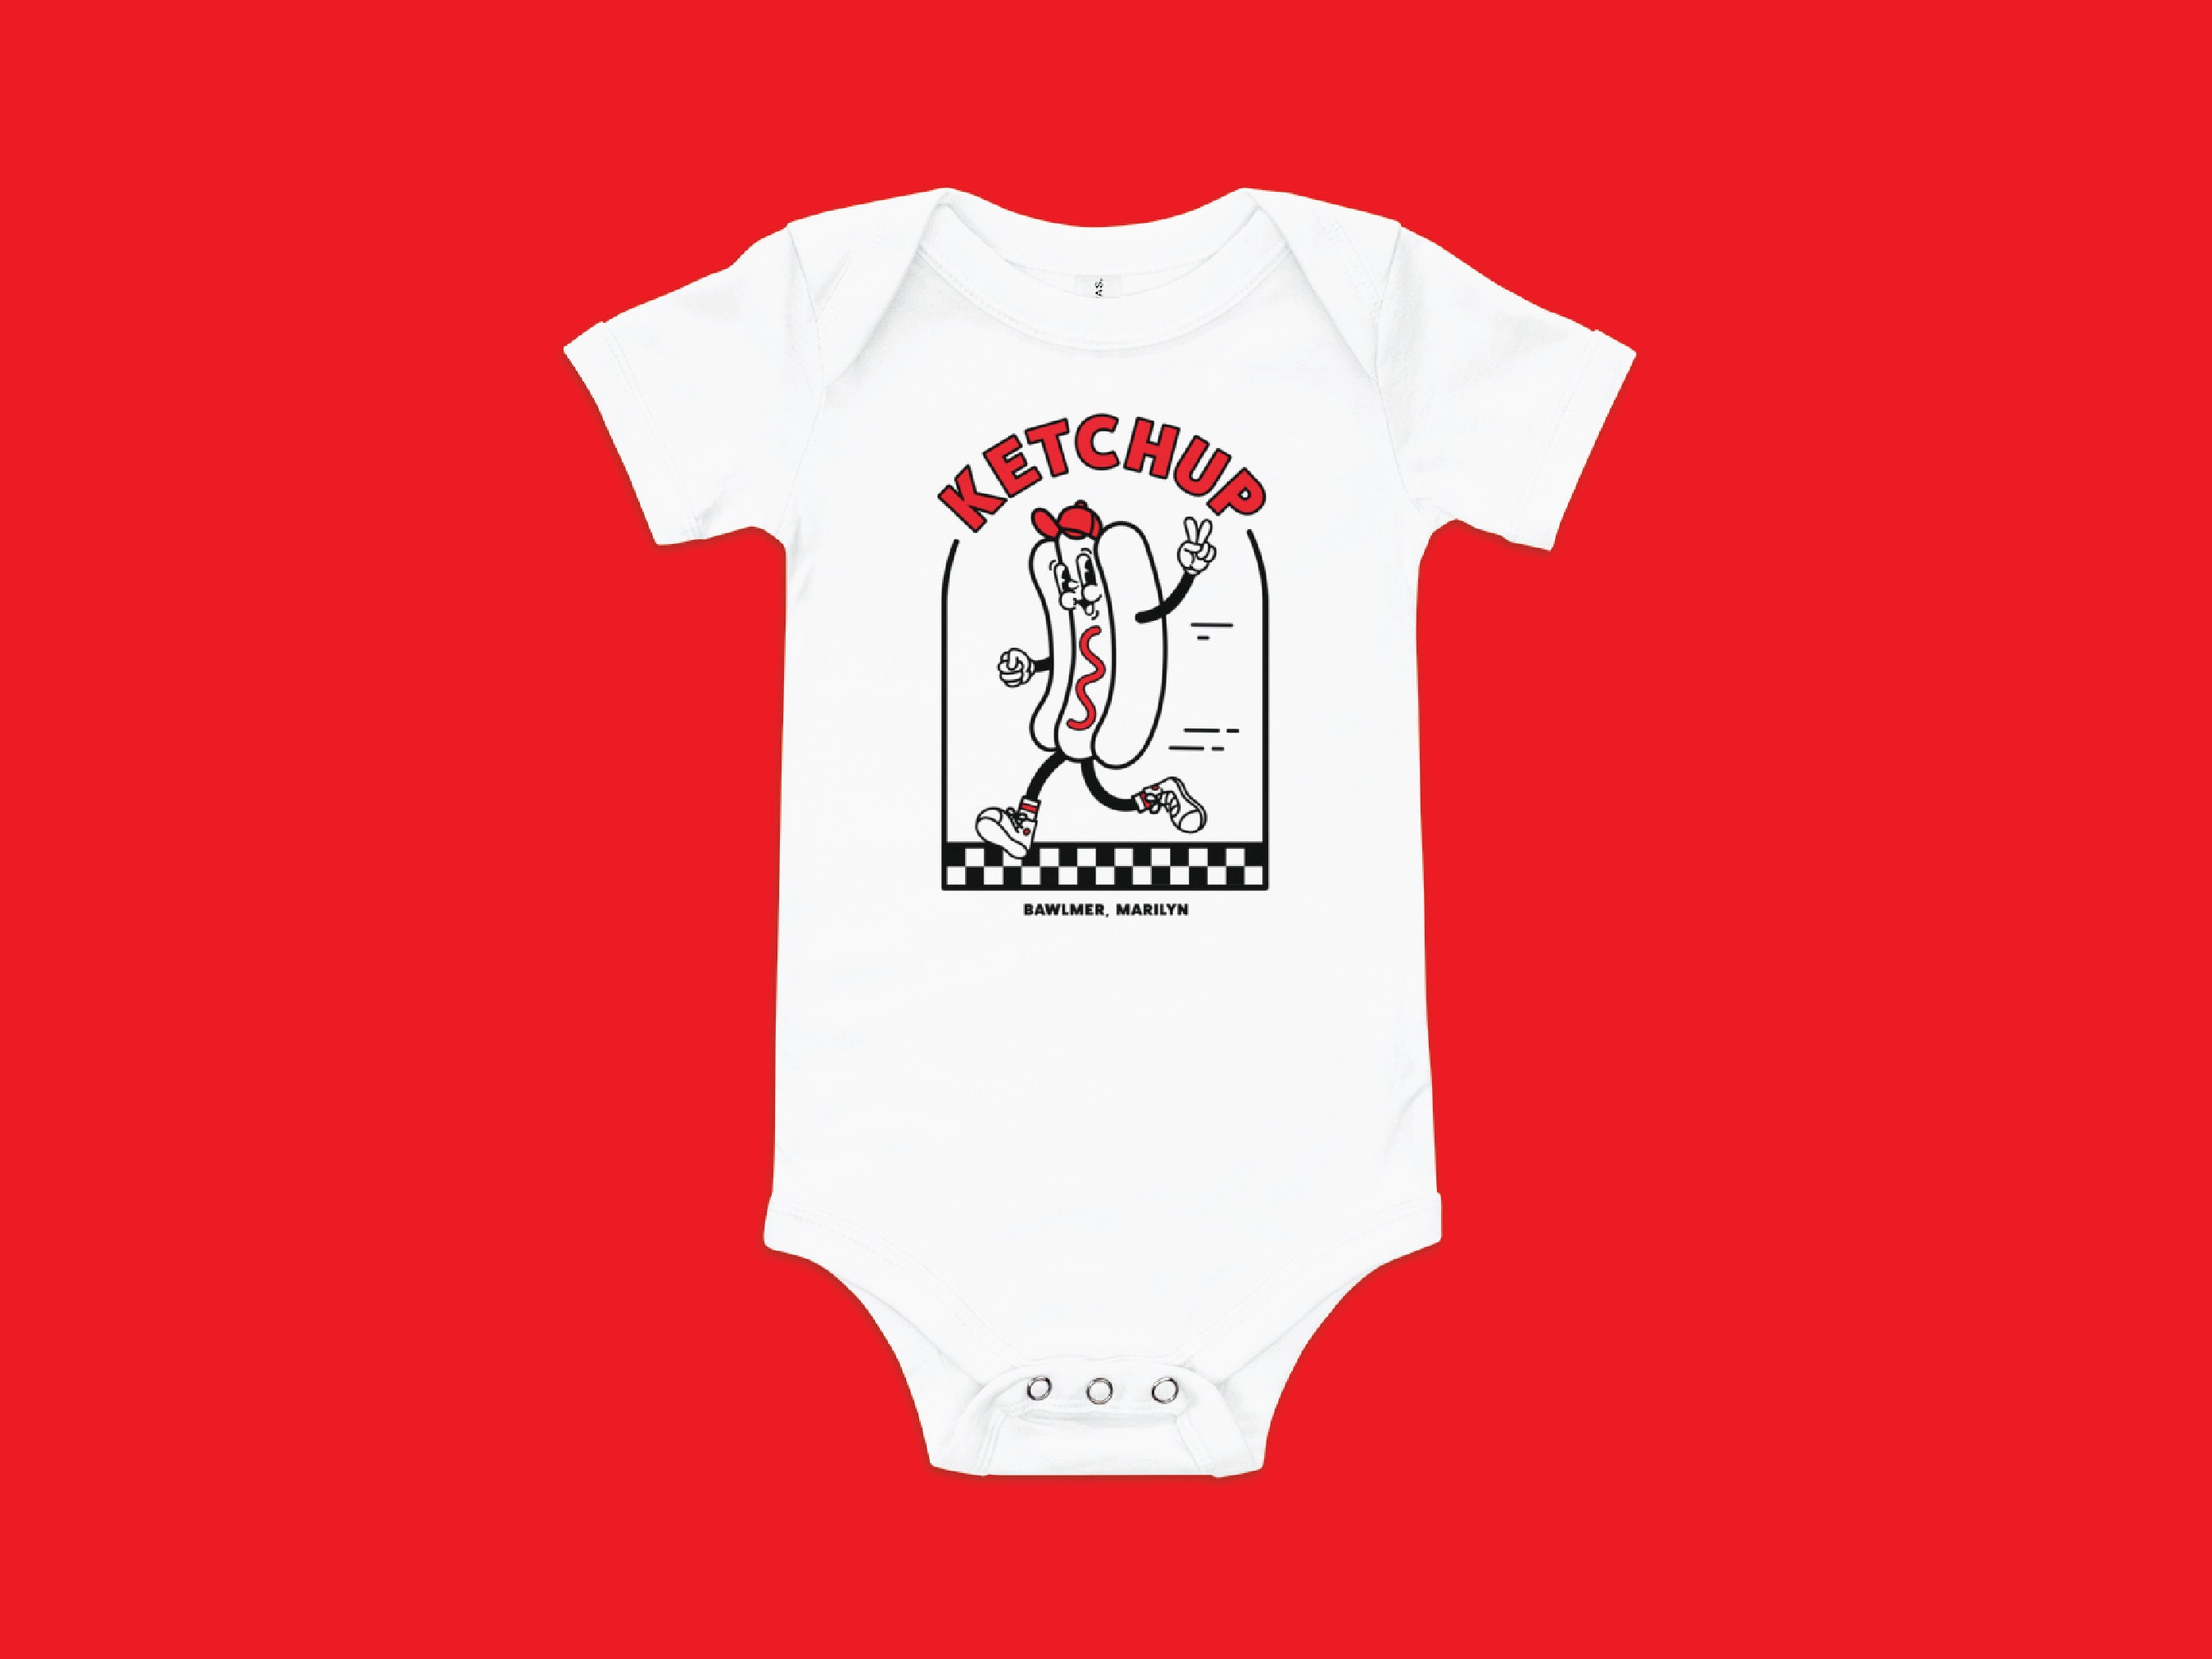 Ketchup Baby T-Shirt | Hot Dog Race, Baltimore Orioles, Cute Baby Shirts